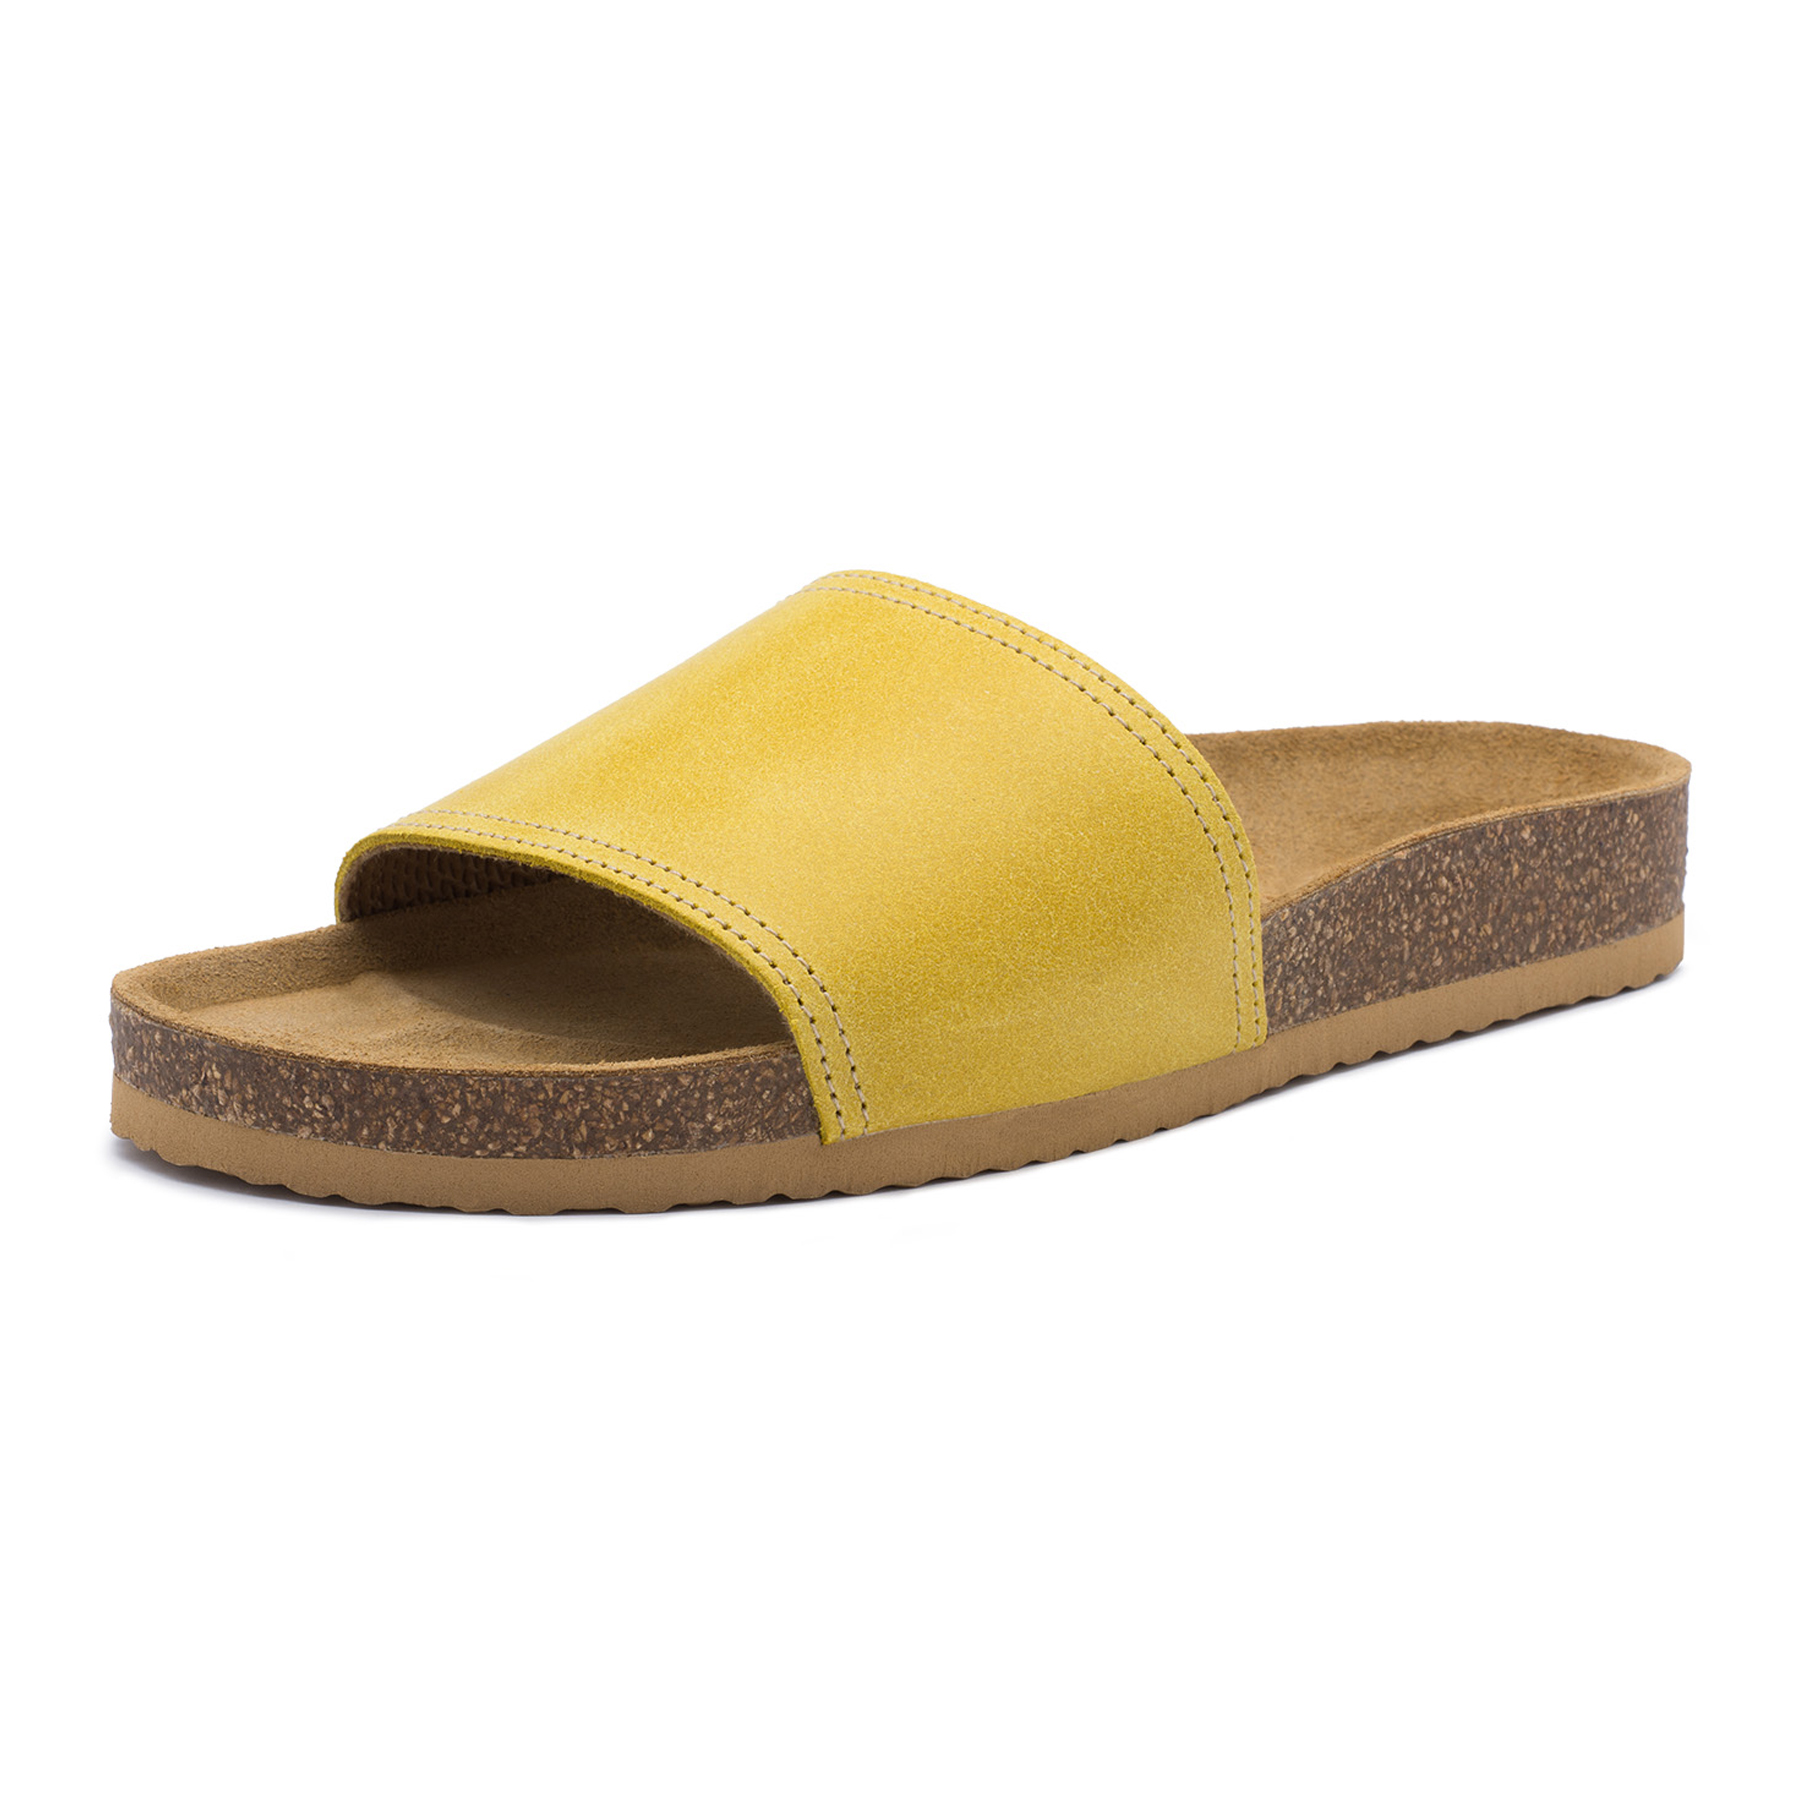 Dámské kožené pantofle bezprackové žluté Fusakle